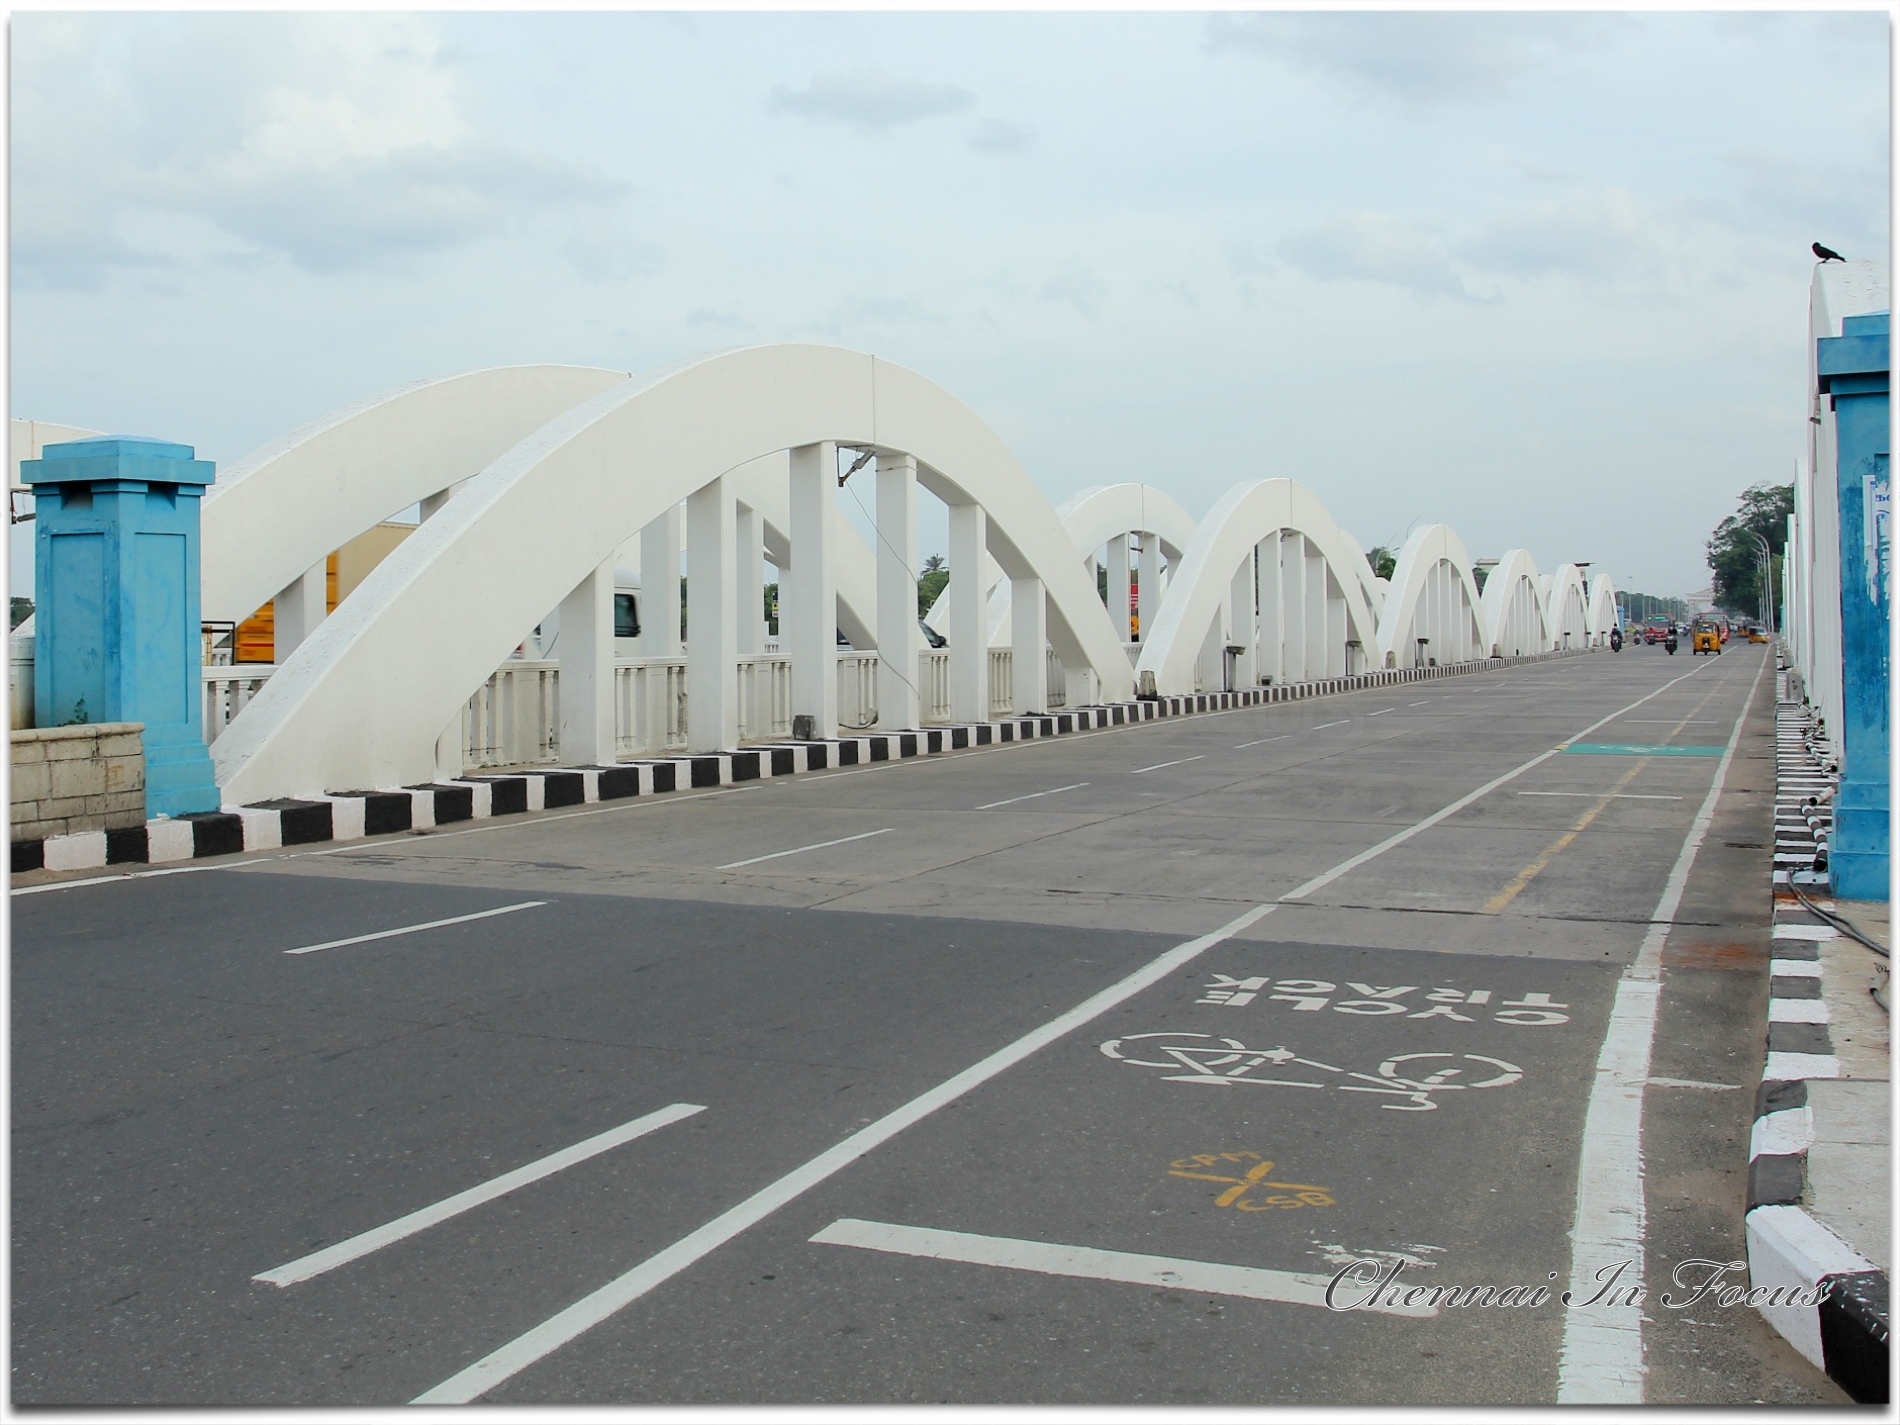 Chennai Cityscape - Napier Bridge